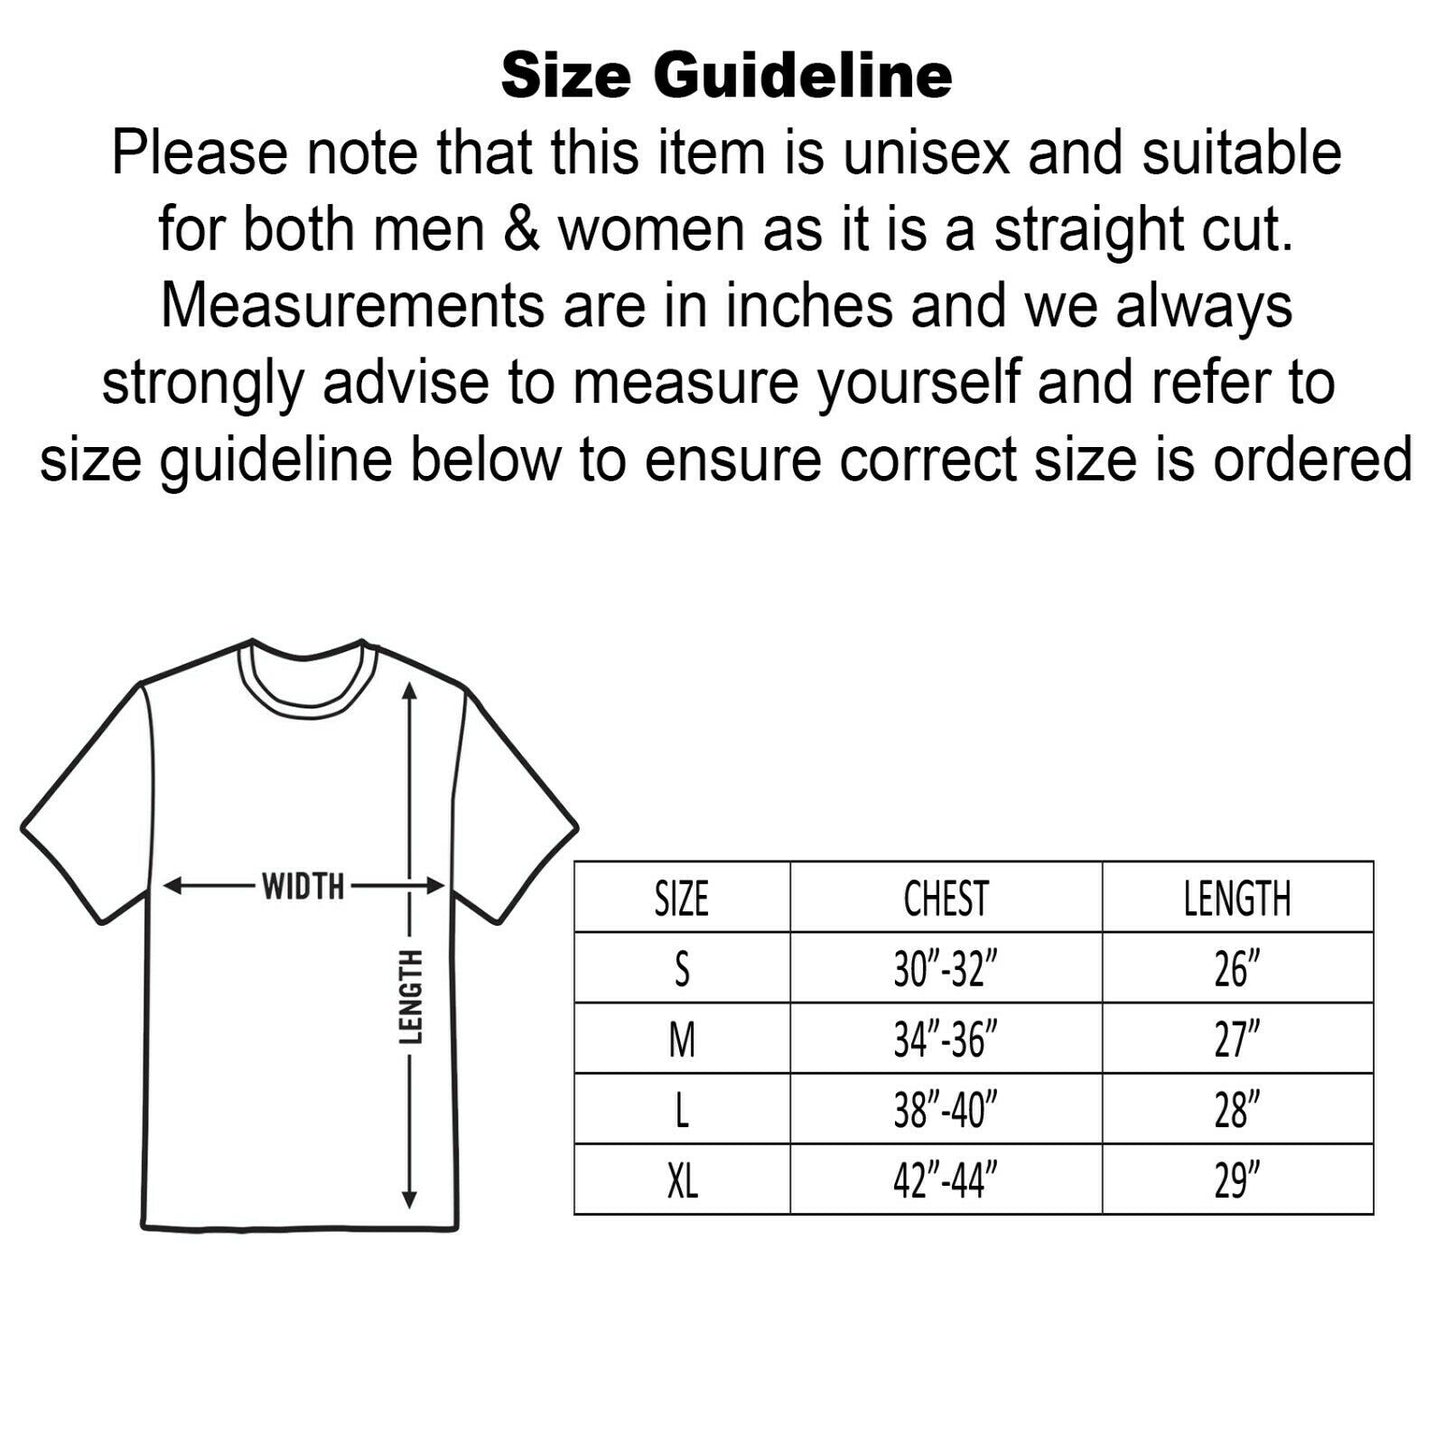 Unisex Zombie Boy Rick Genest Raglan 3/4 Sleeve Baseball T-Shirt